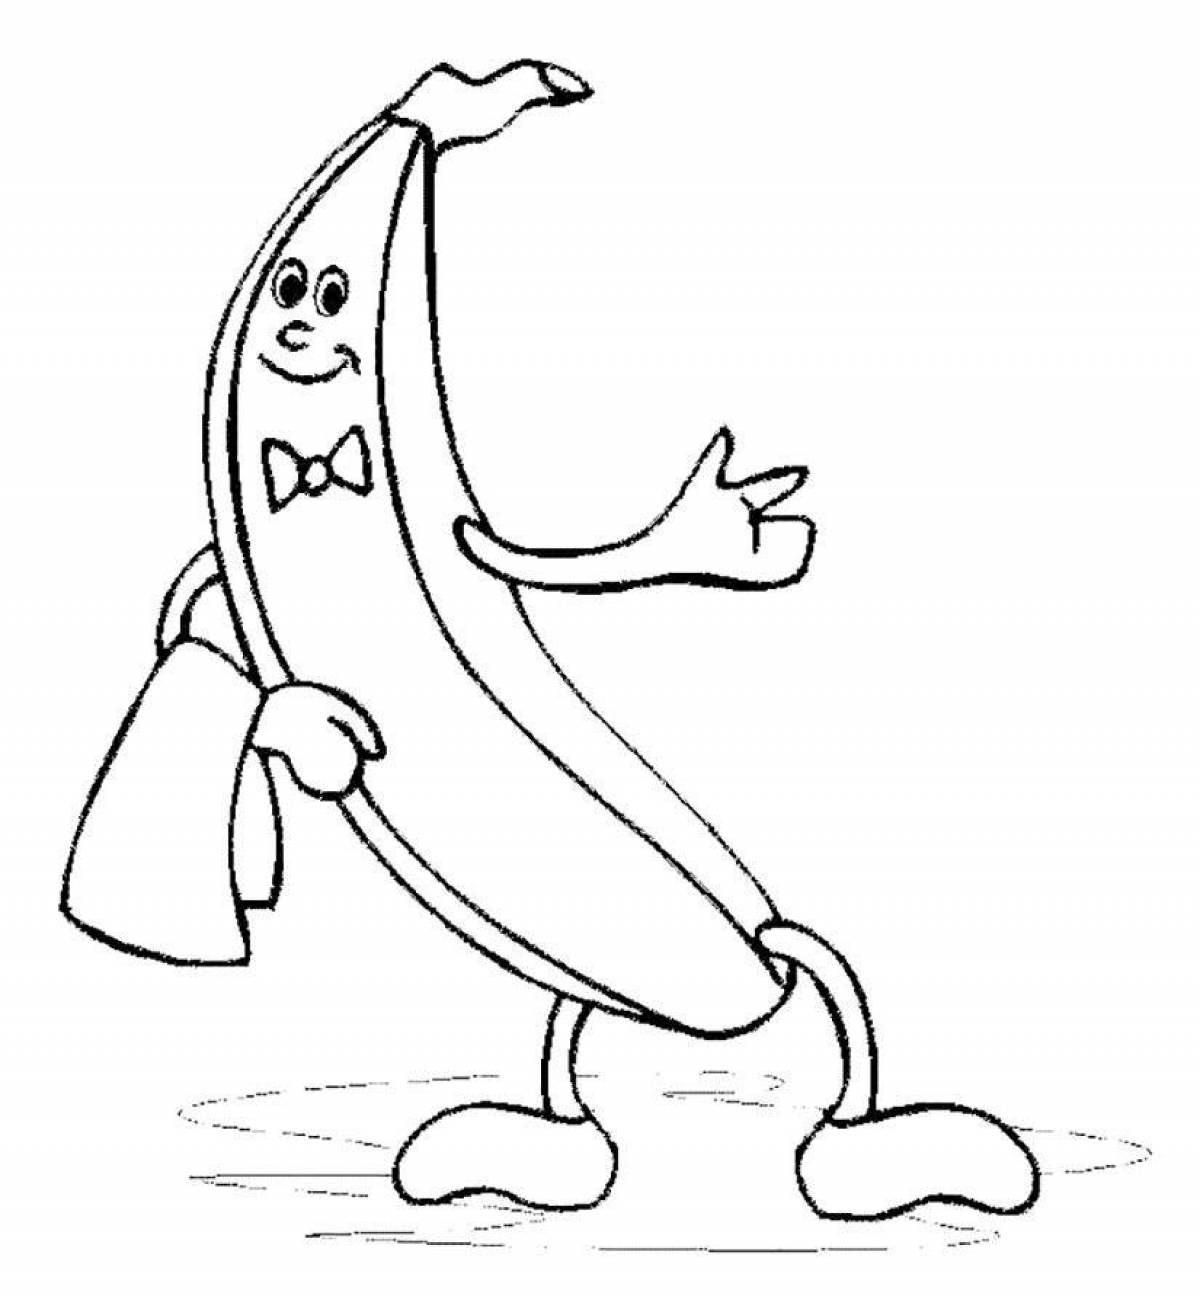 Joyful banana coloring book for kids